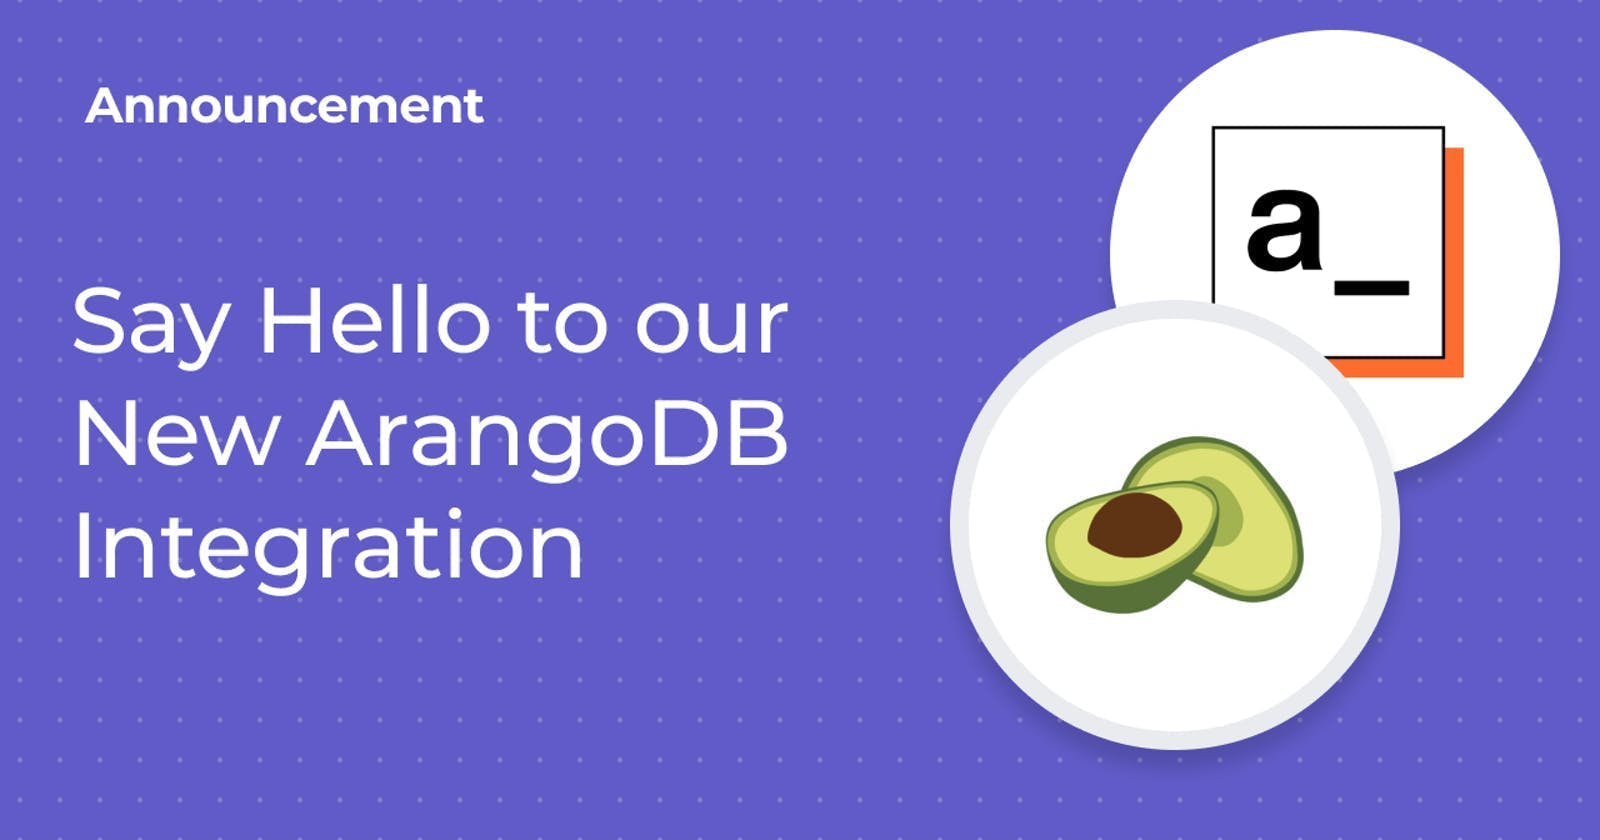 SEO | Say Hello to Our New ArangoDB Integration